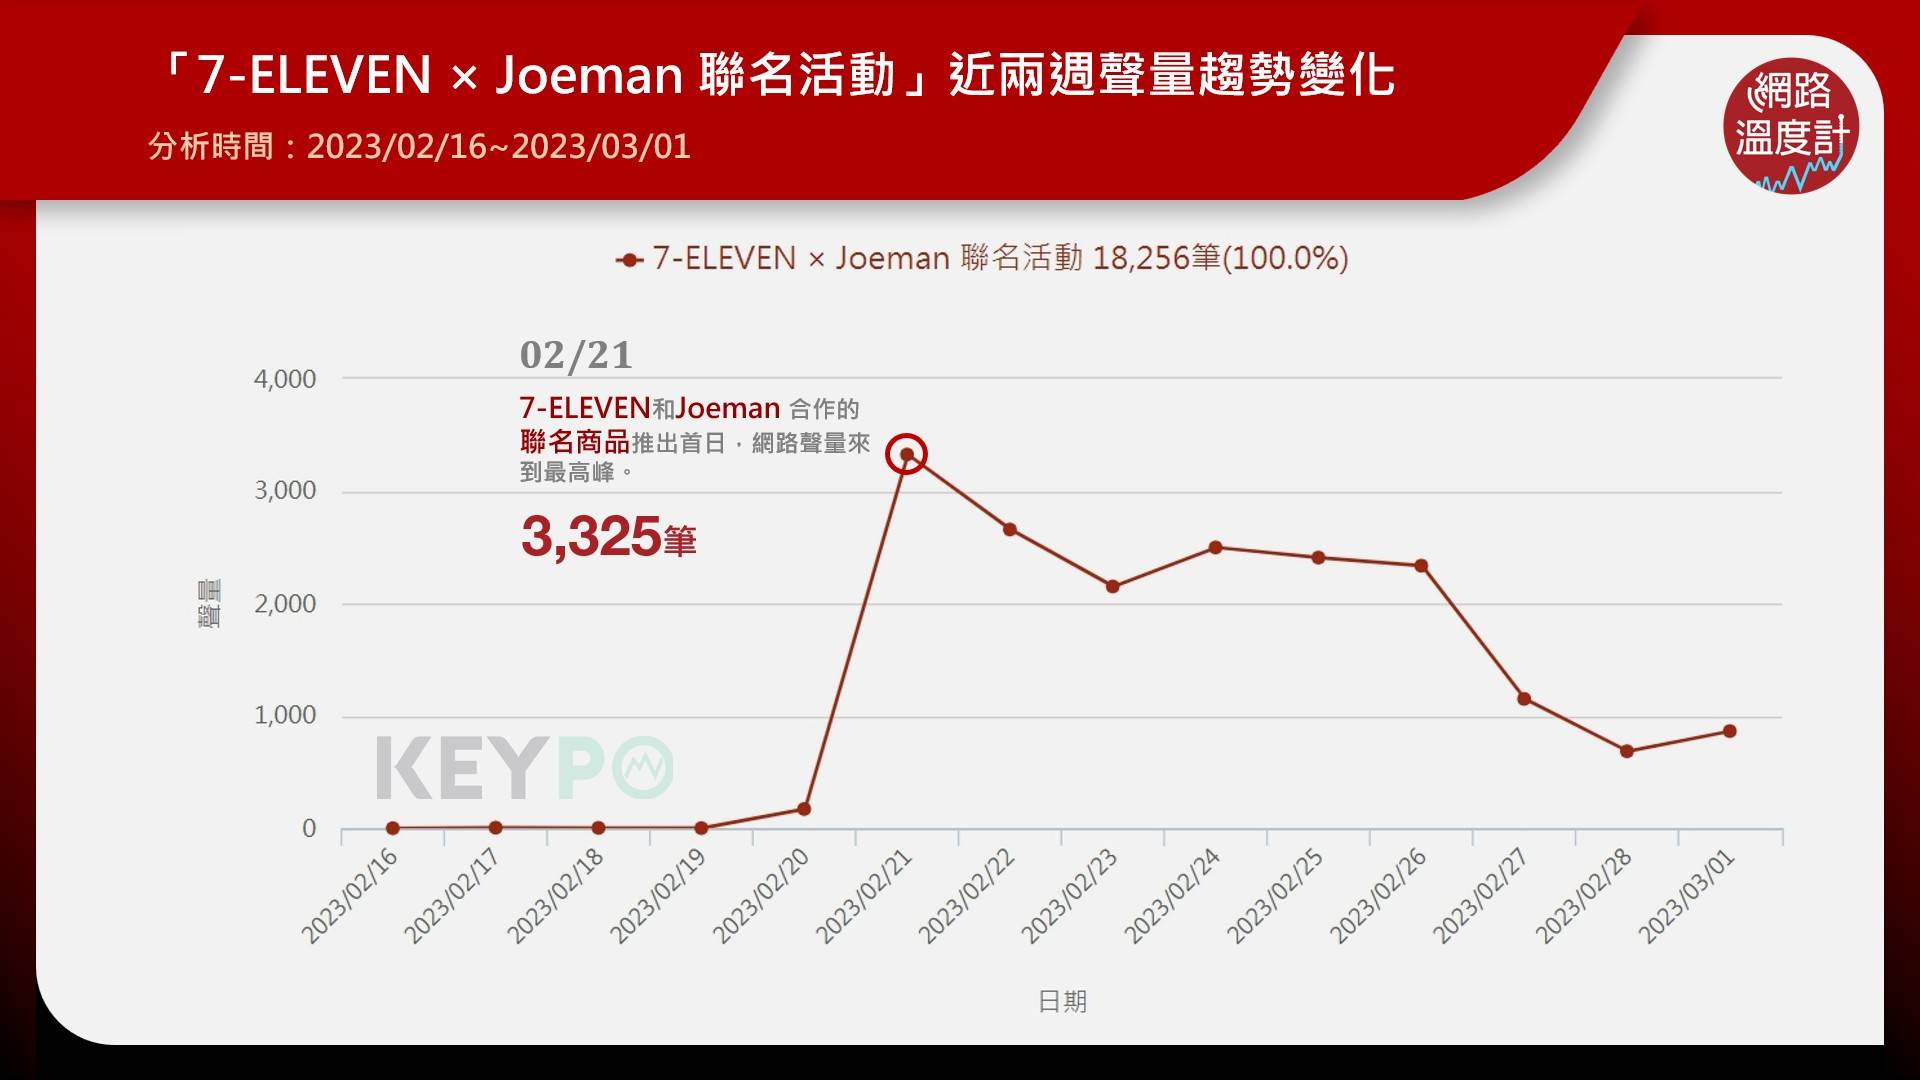 「7-ELEVEN × Joeman 聯名活動」近兩週聲量趨勢變化